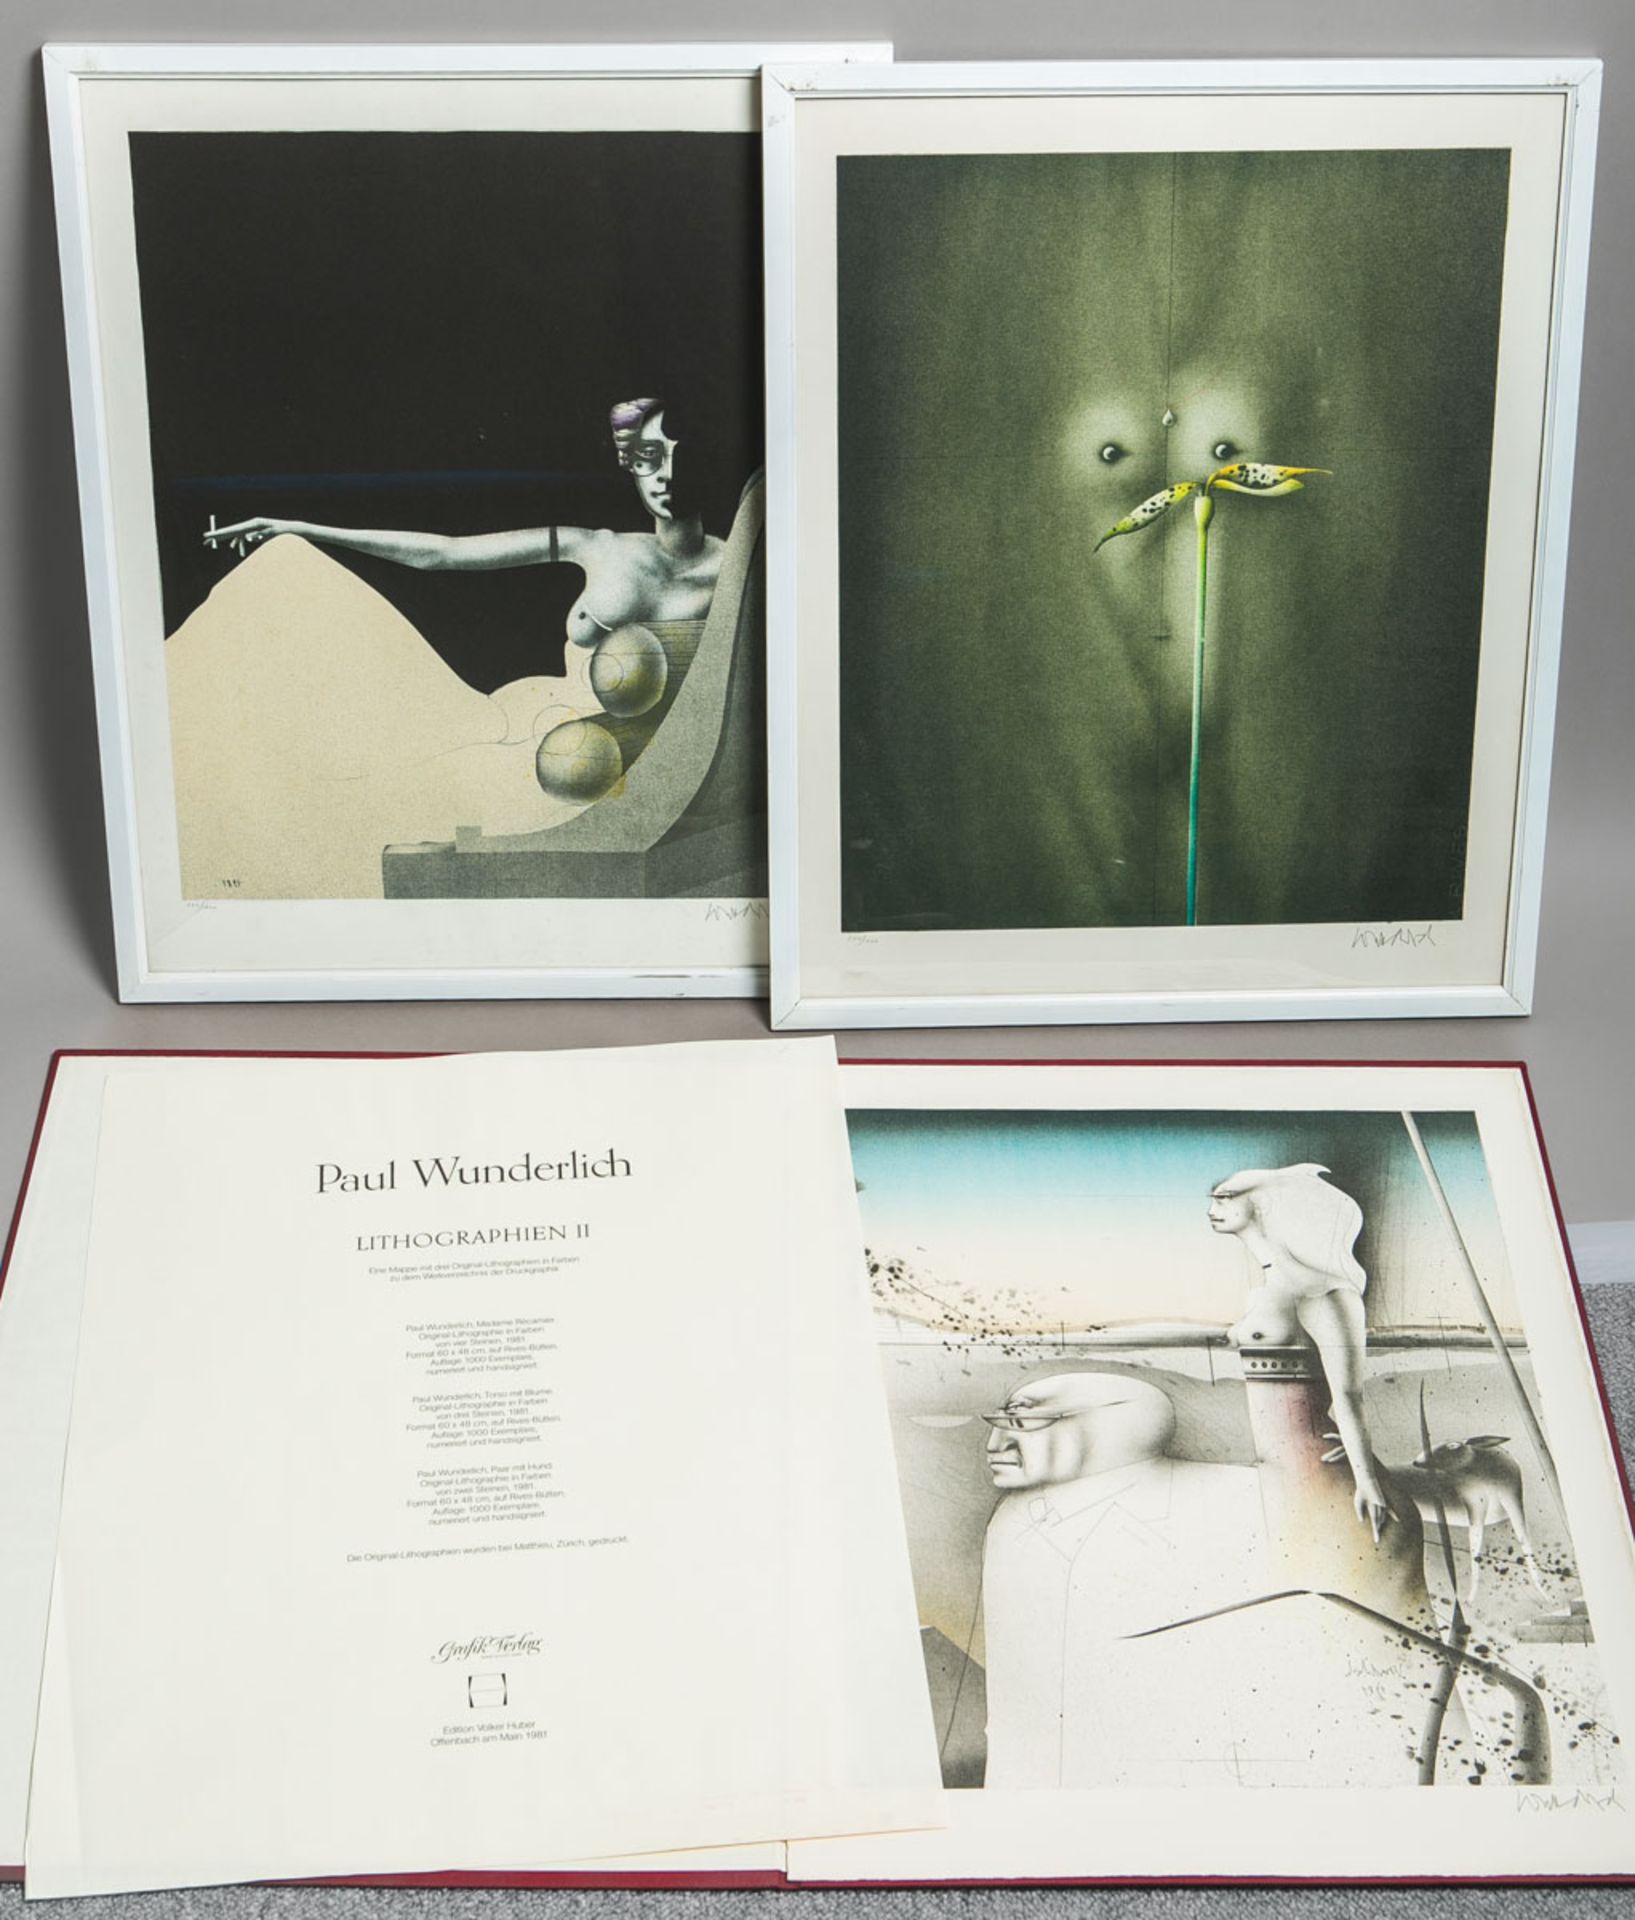 Wunderlich, Paul (1927 - 2010), Mappe mit 3 Lithografien "Lithographien 2" (1981)